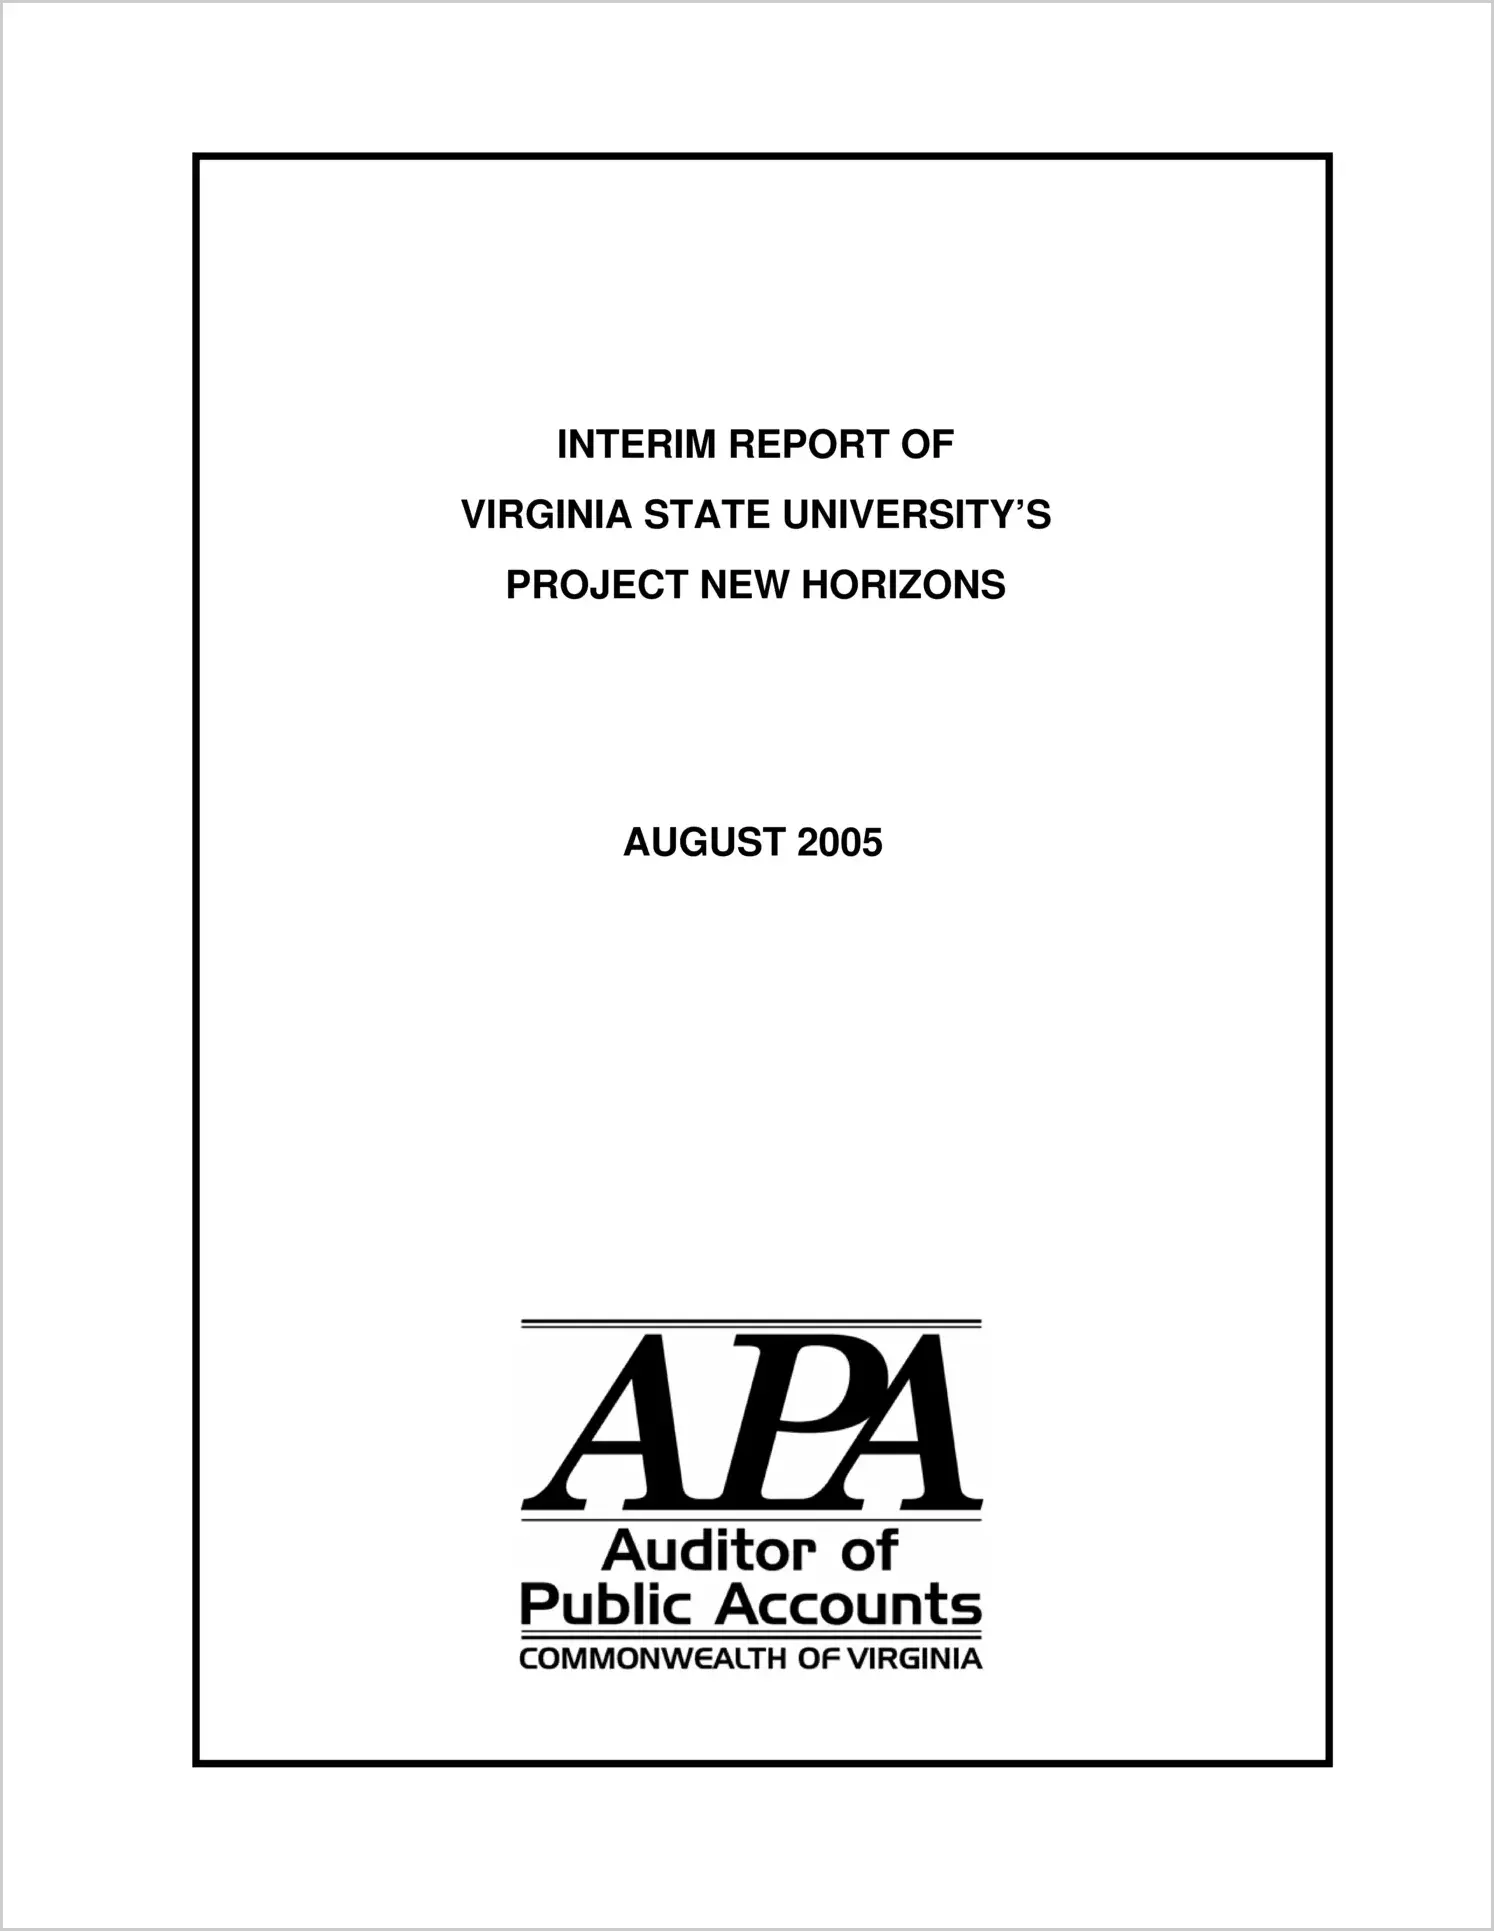 Interim Report of Virginia State University? Project New Horizons, August 2005